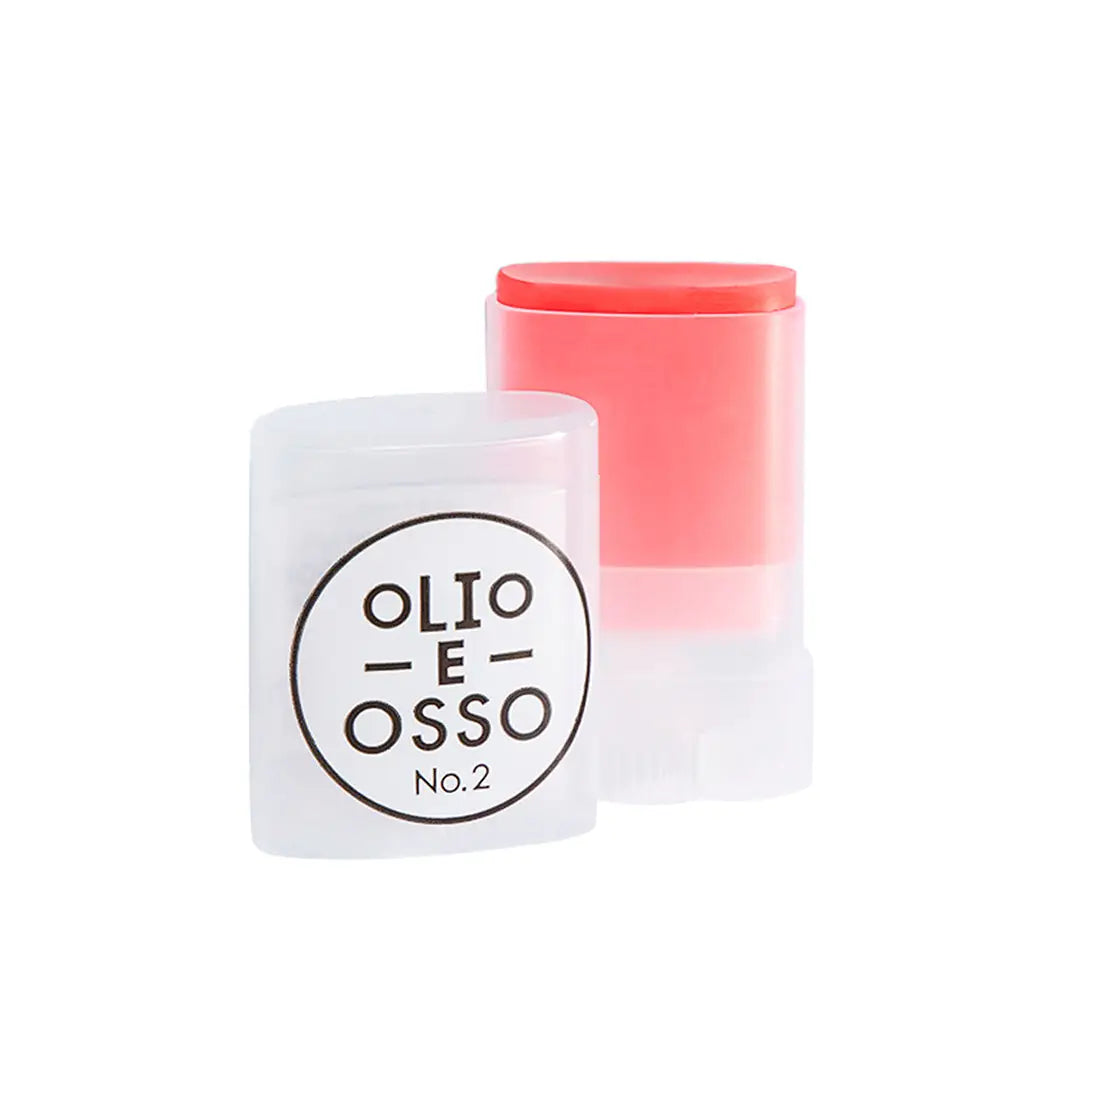 Olio E Osso Tinted Balm No. 2 French Melon - Free Shipping 